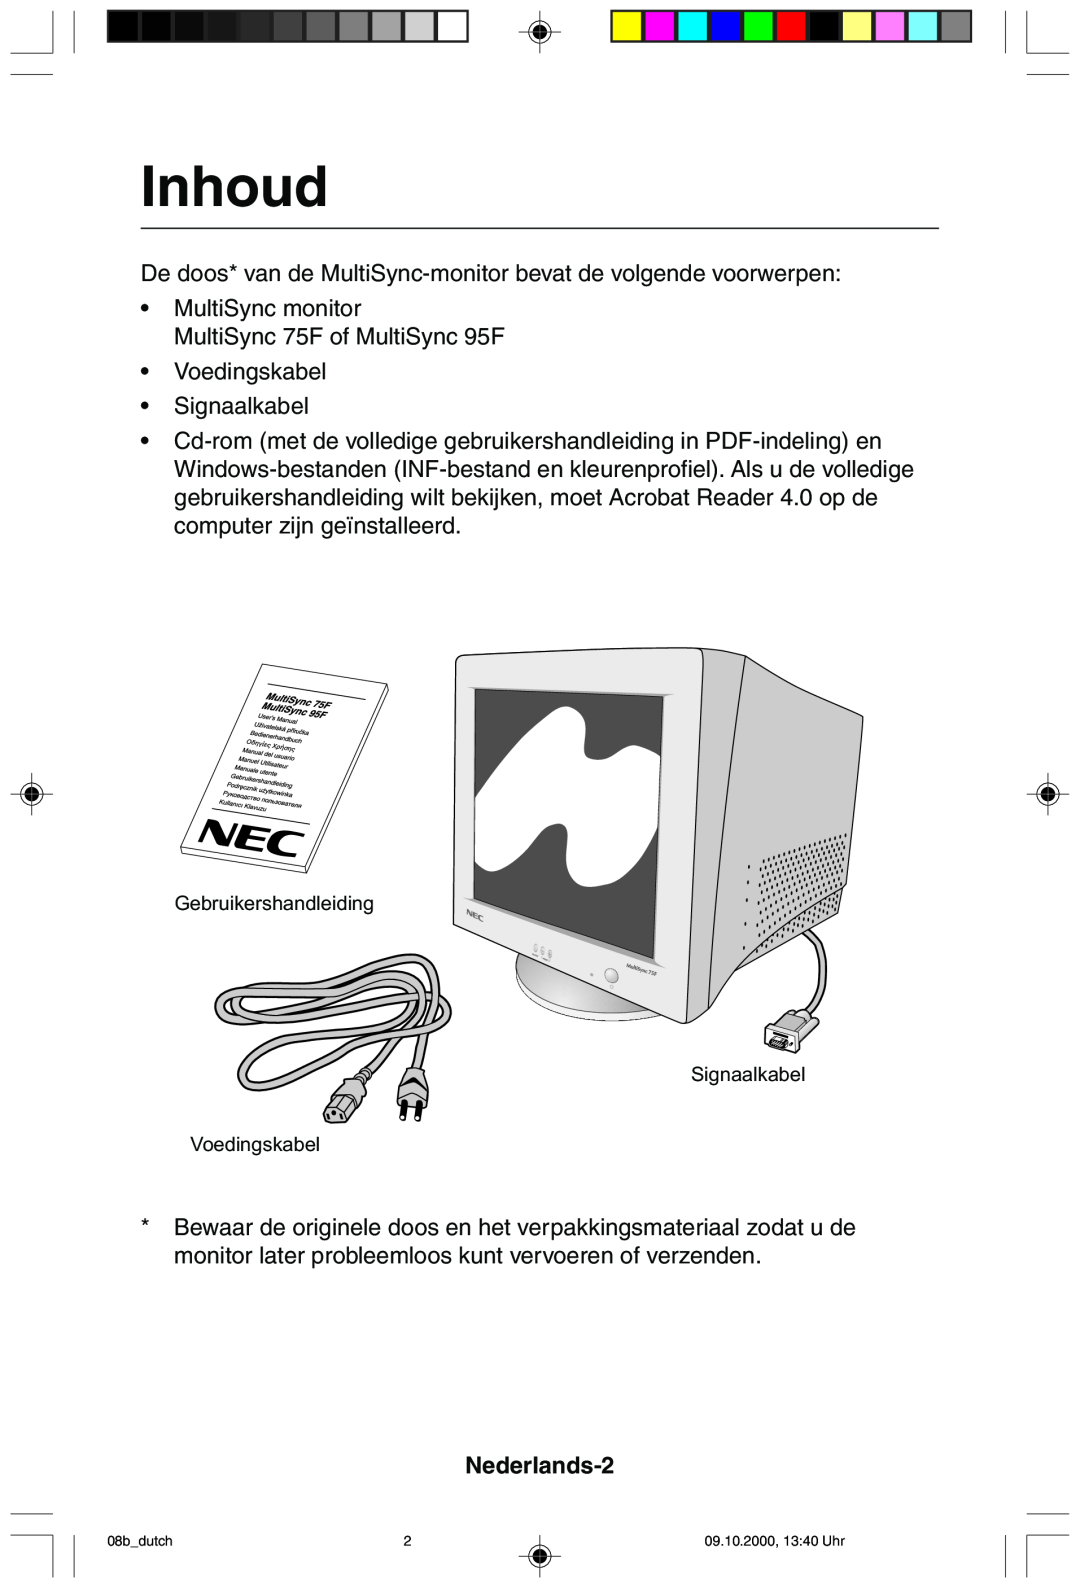 NEC 95F user manual Inhoud, Nederlands-2 